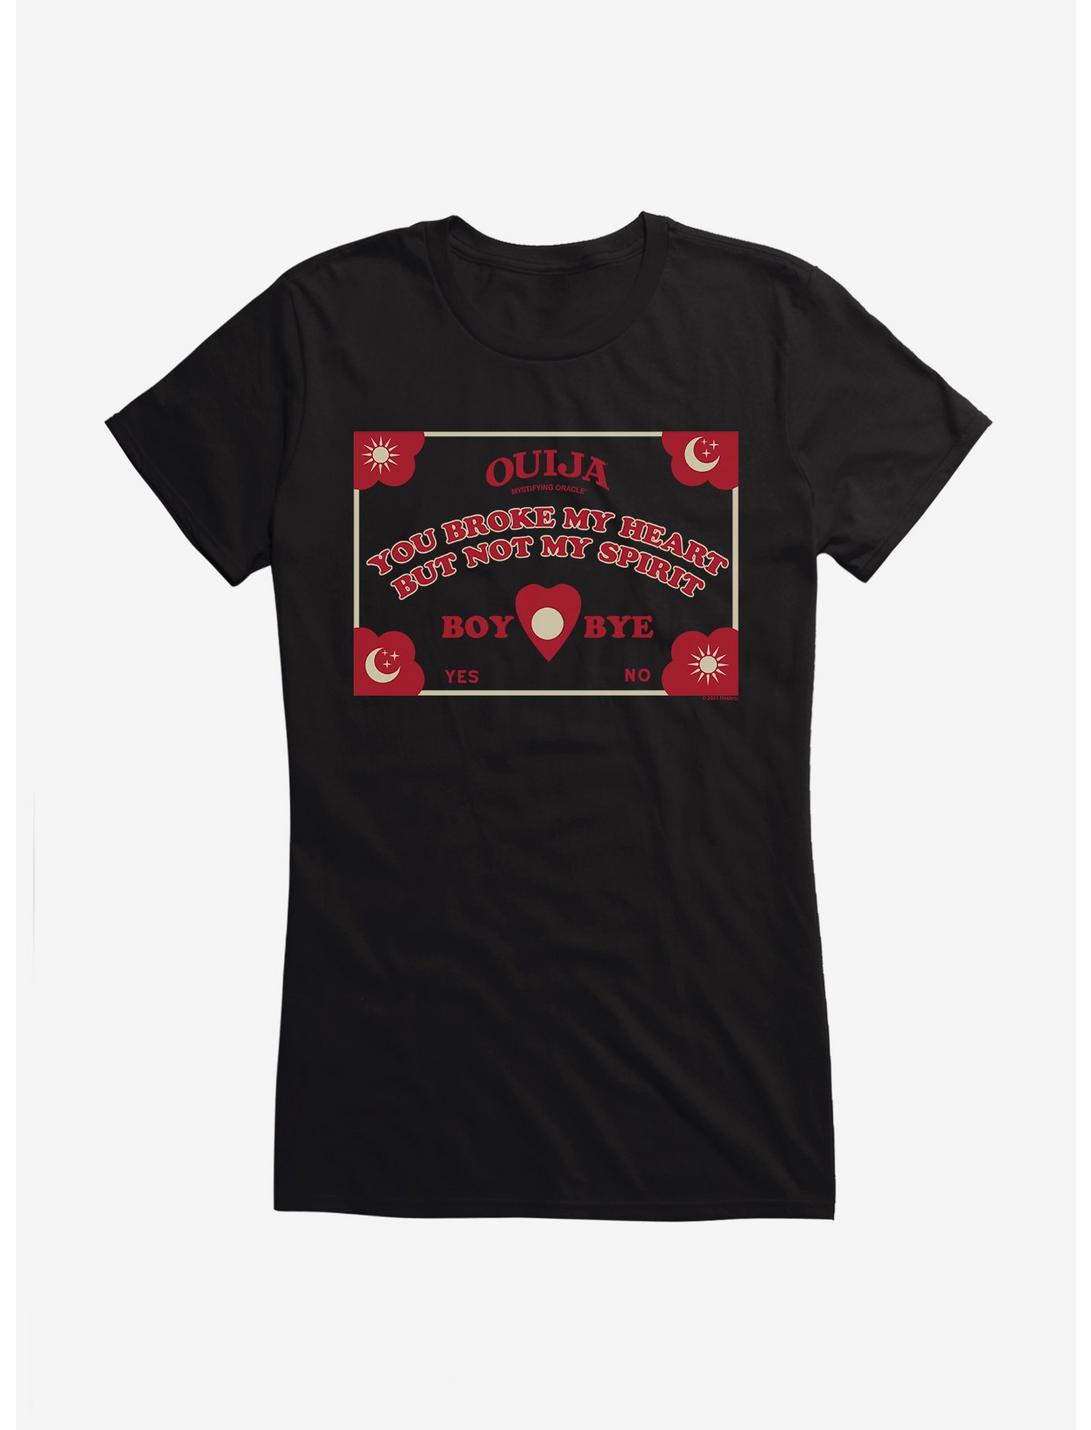 Ouija Game Broken Heart Not Spirit Girls T-Shirt, , hi-res